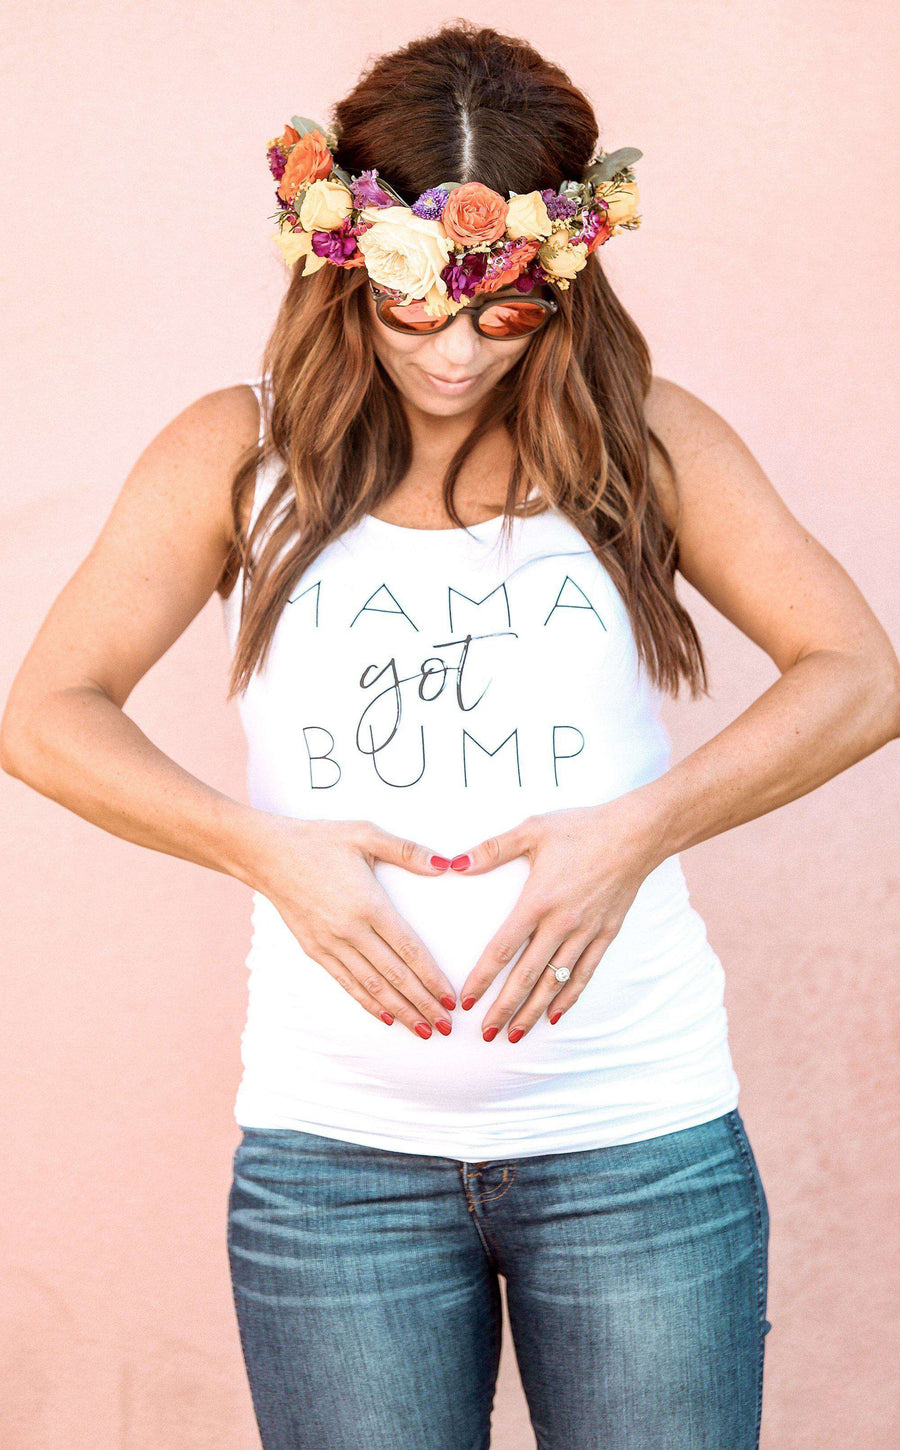 Maternity Shirt - Mama Got Bump Maternity Tank